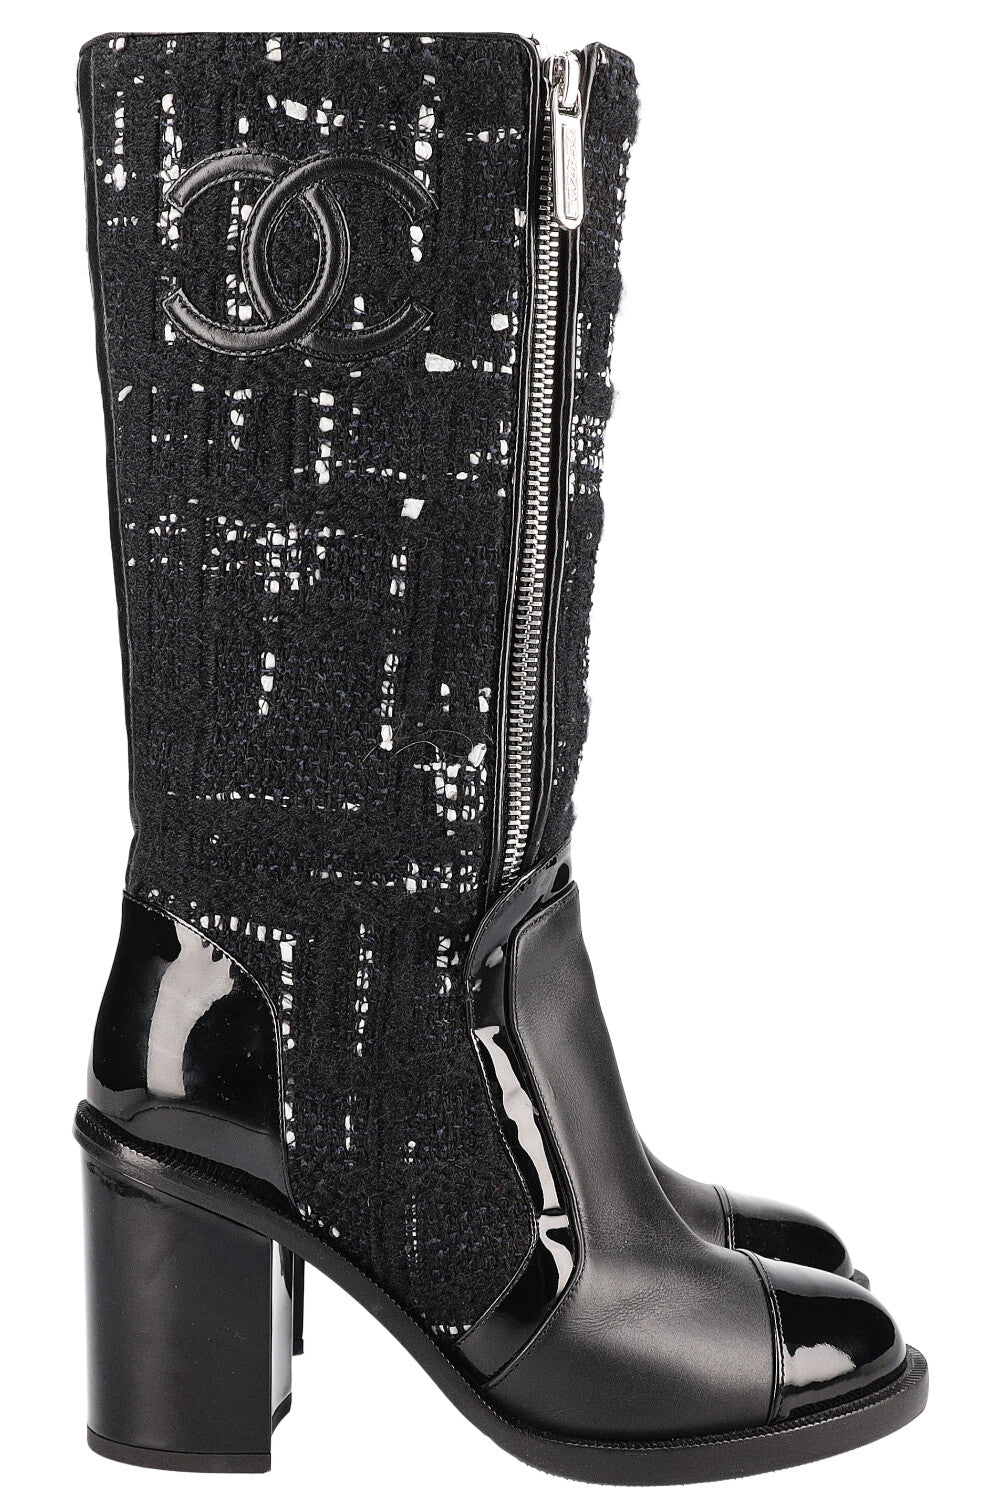 CHANEL Boots Tweed Noir et Blanc